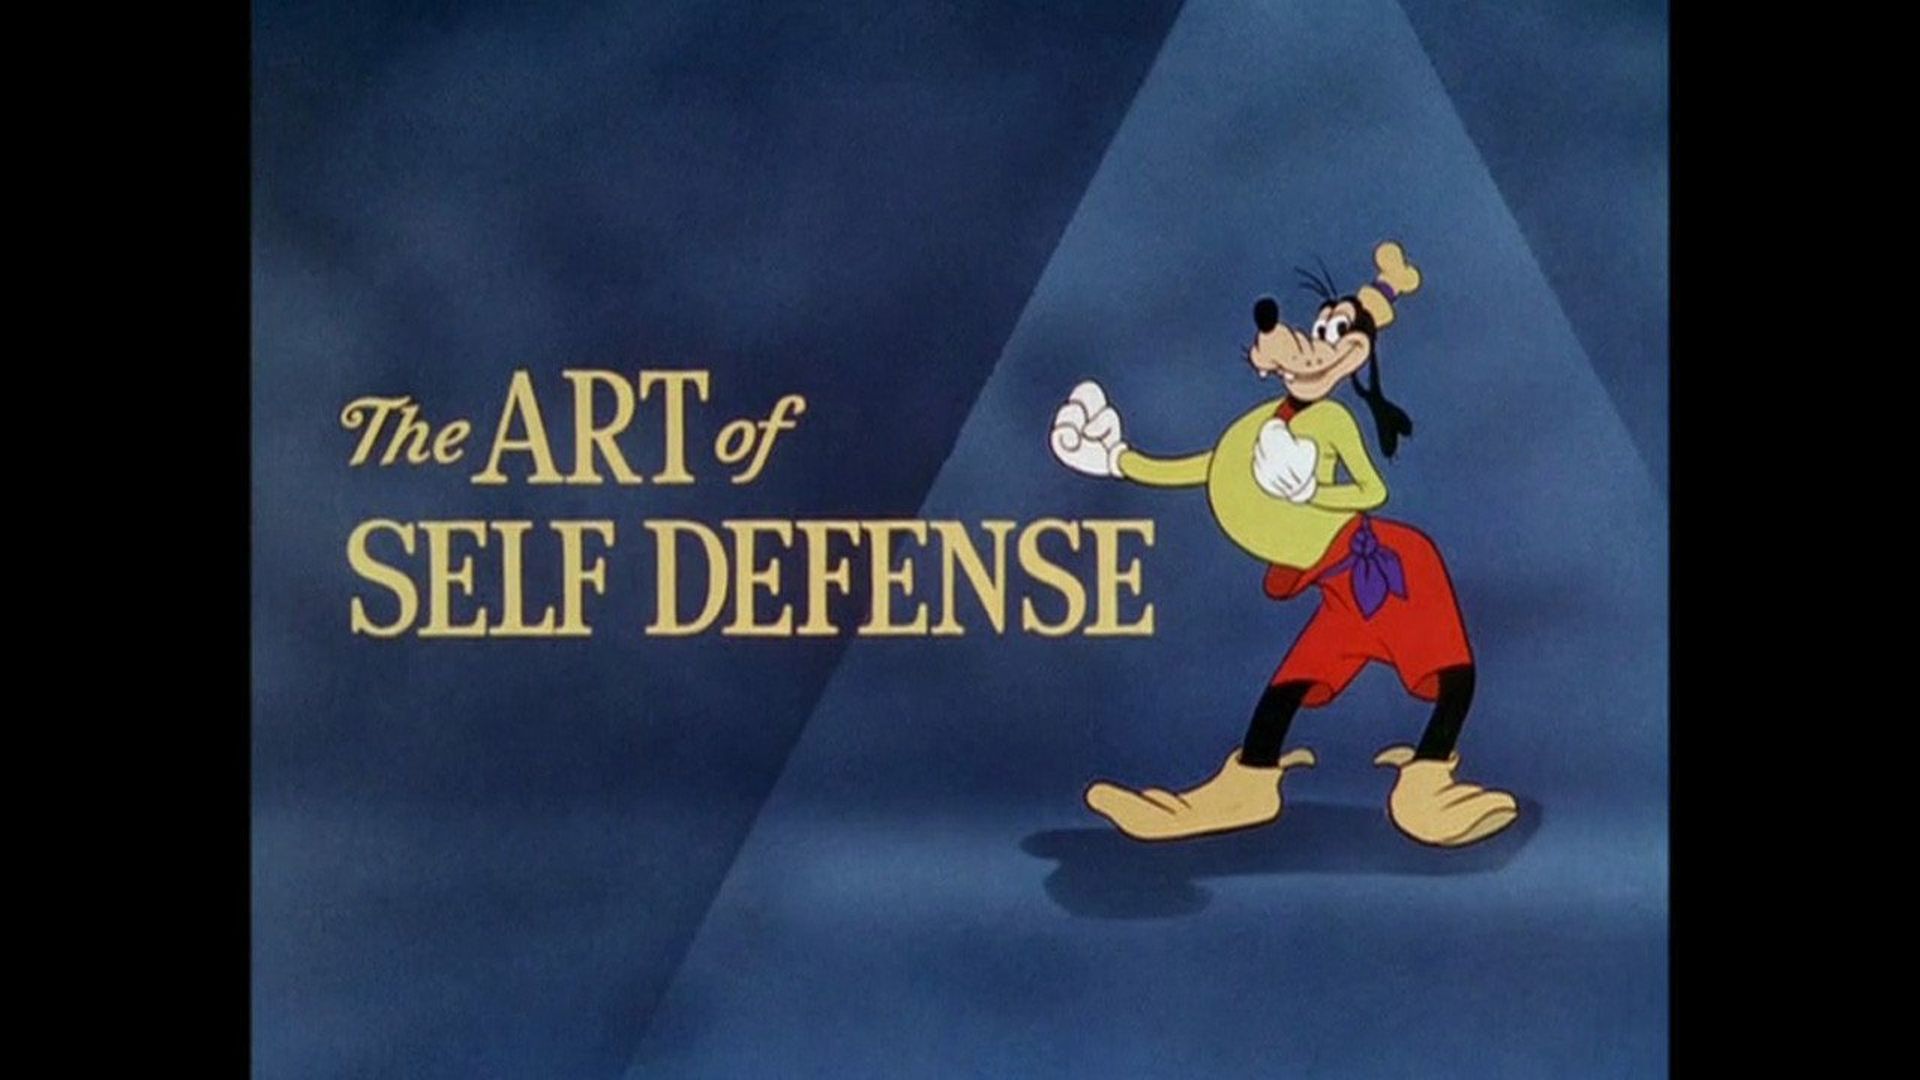 The Art of Self Defense Backdrop